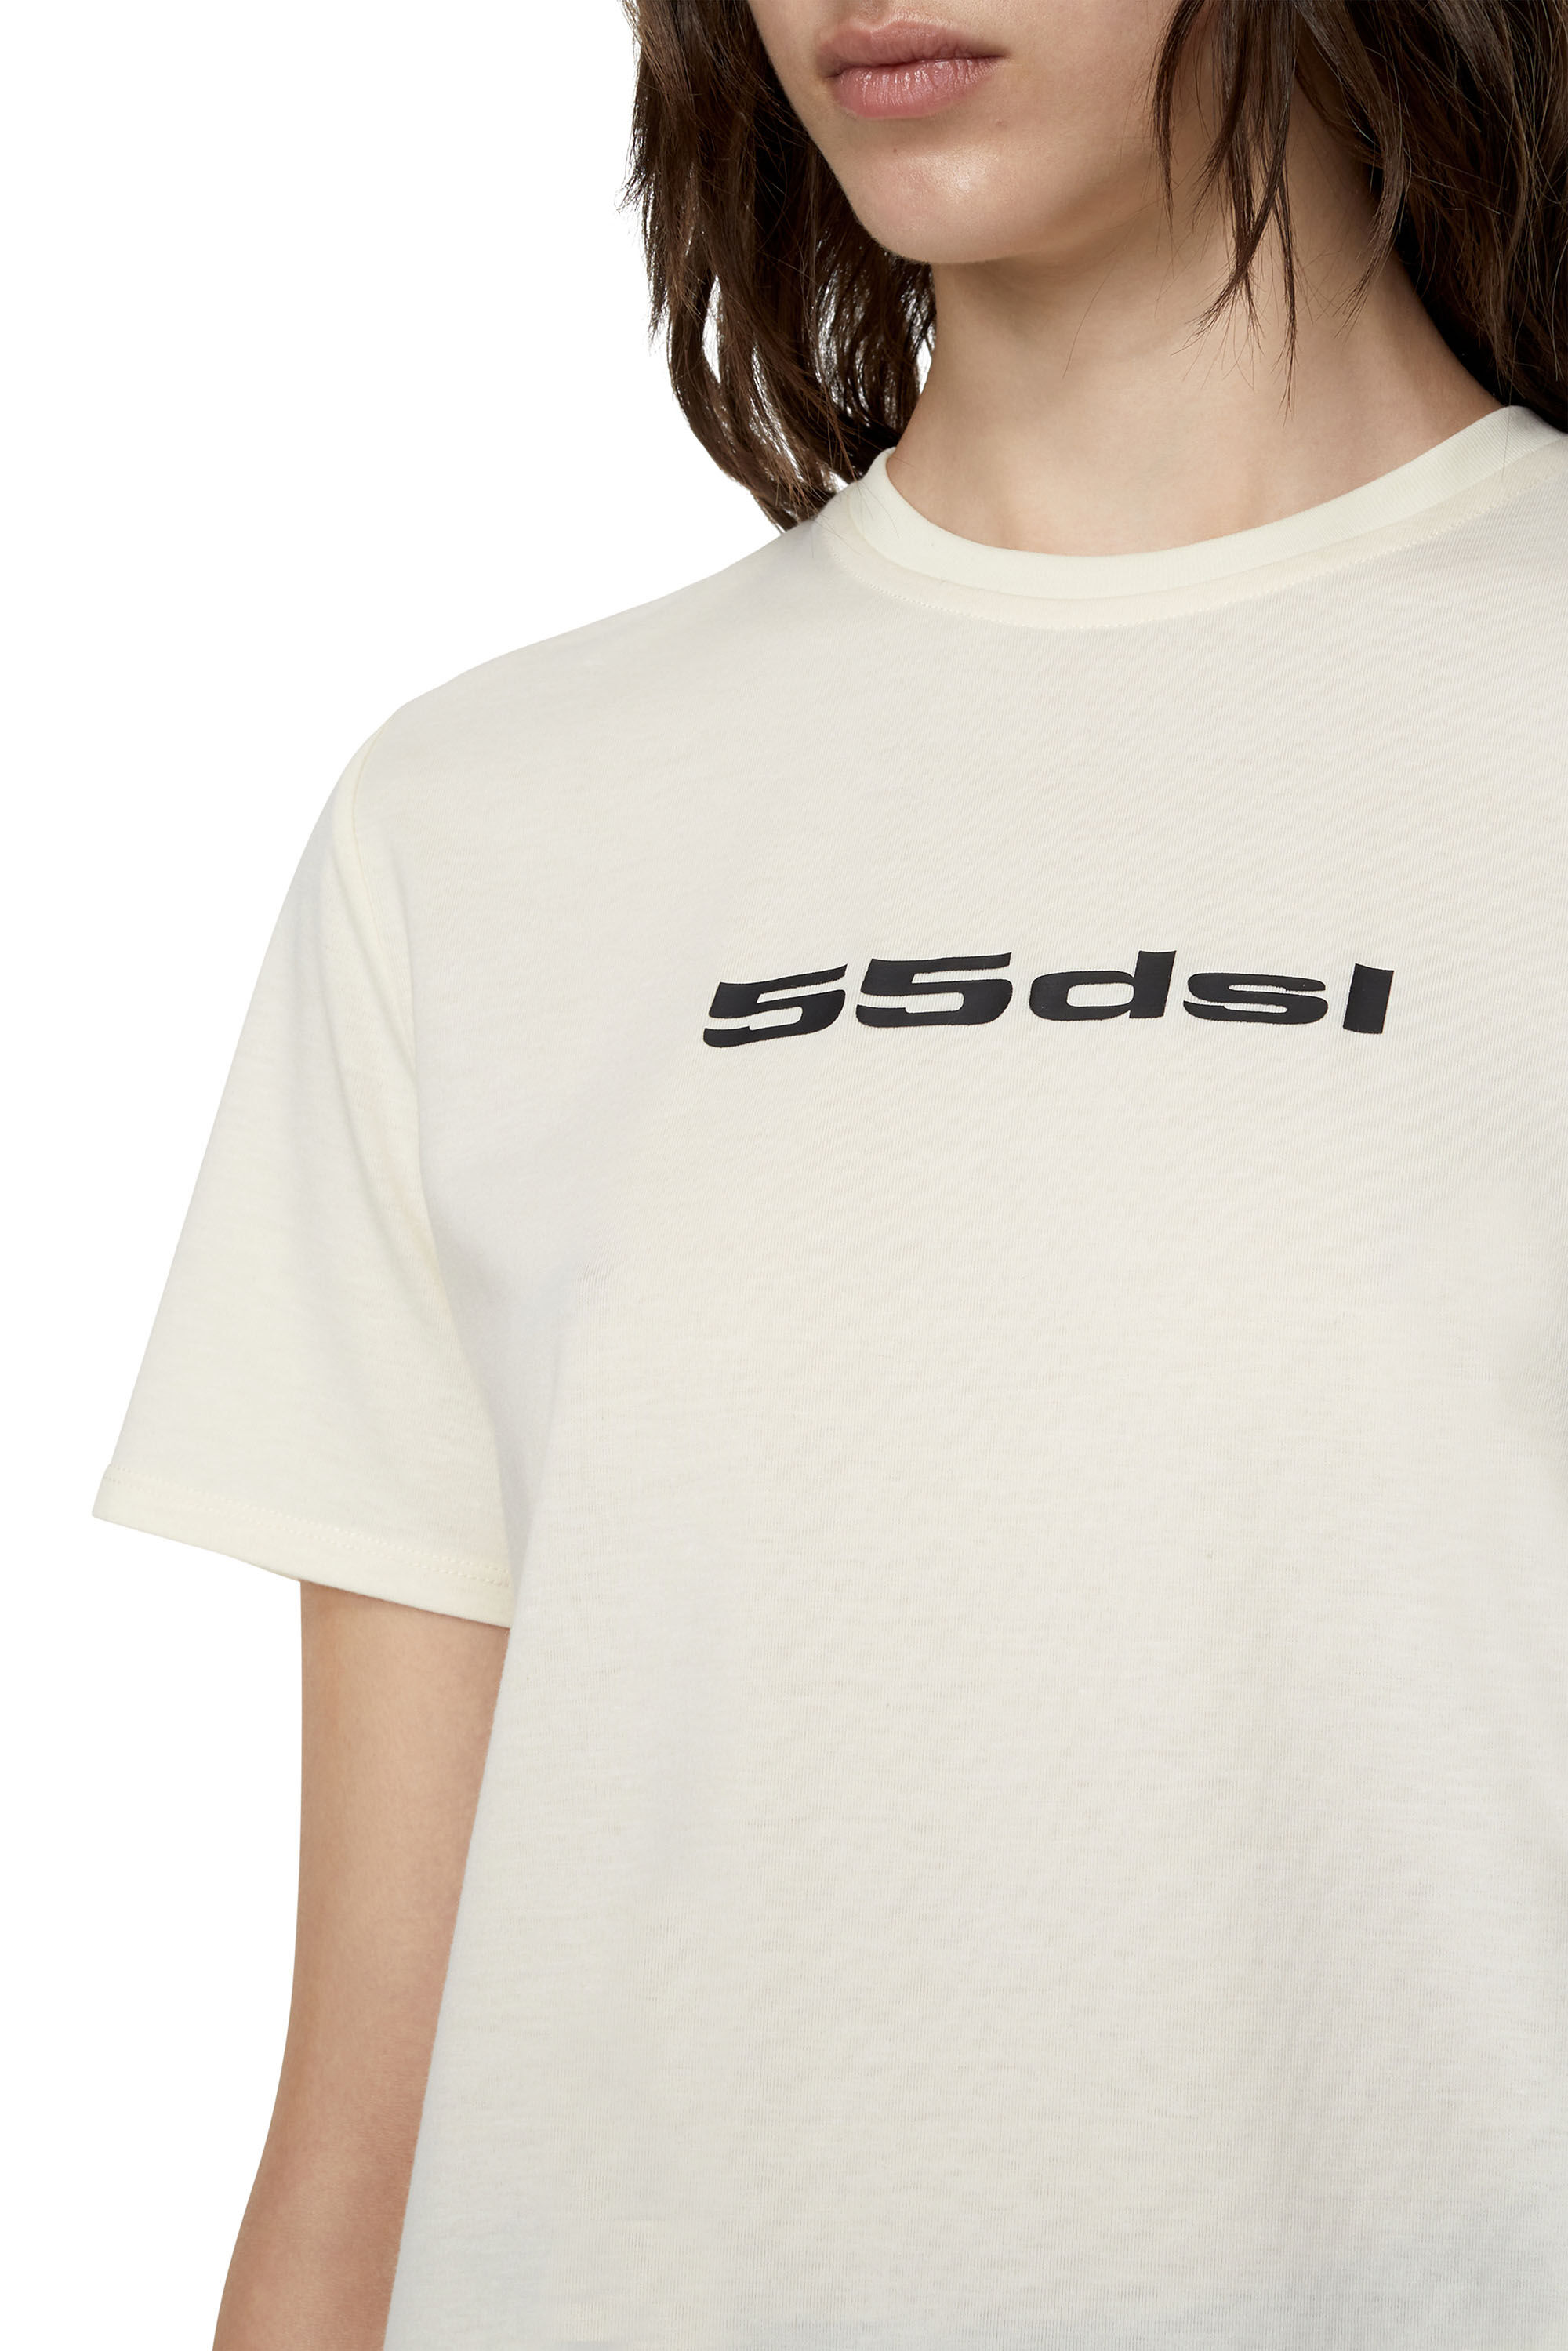 55DSL ロンT - Tシャツ